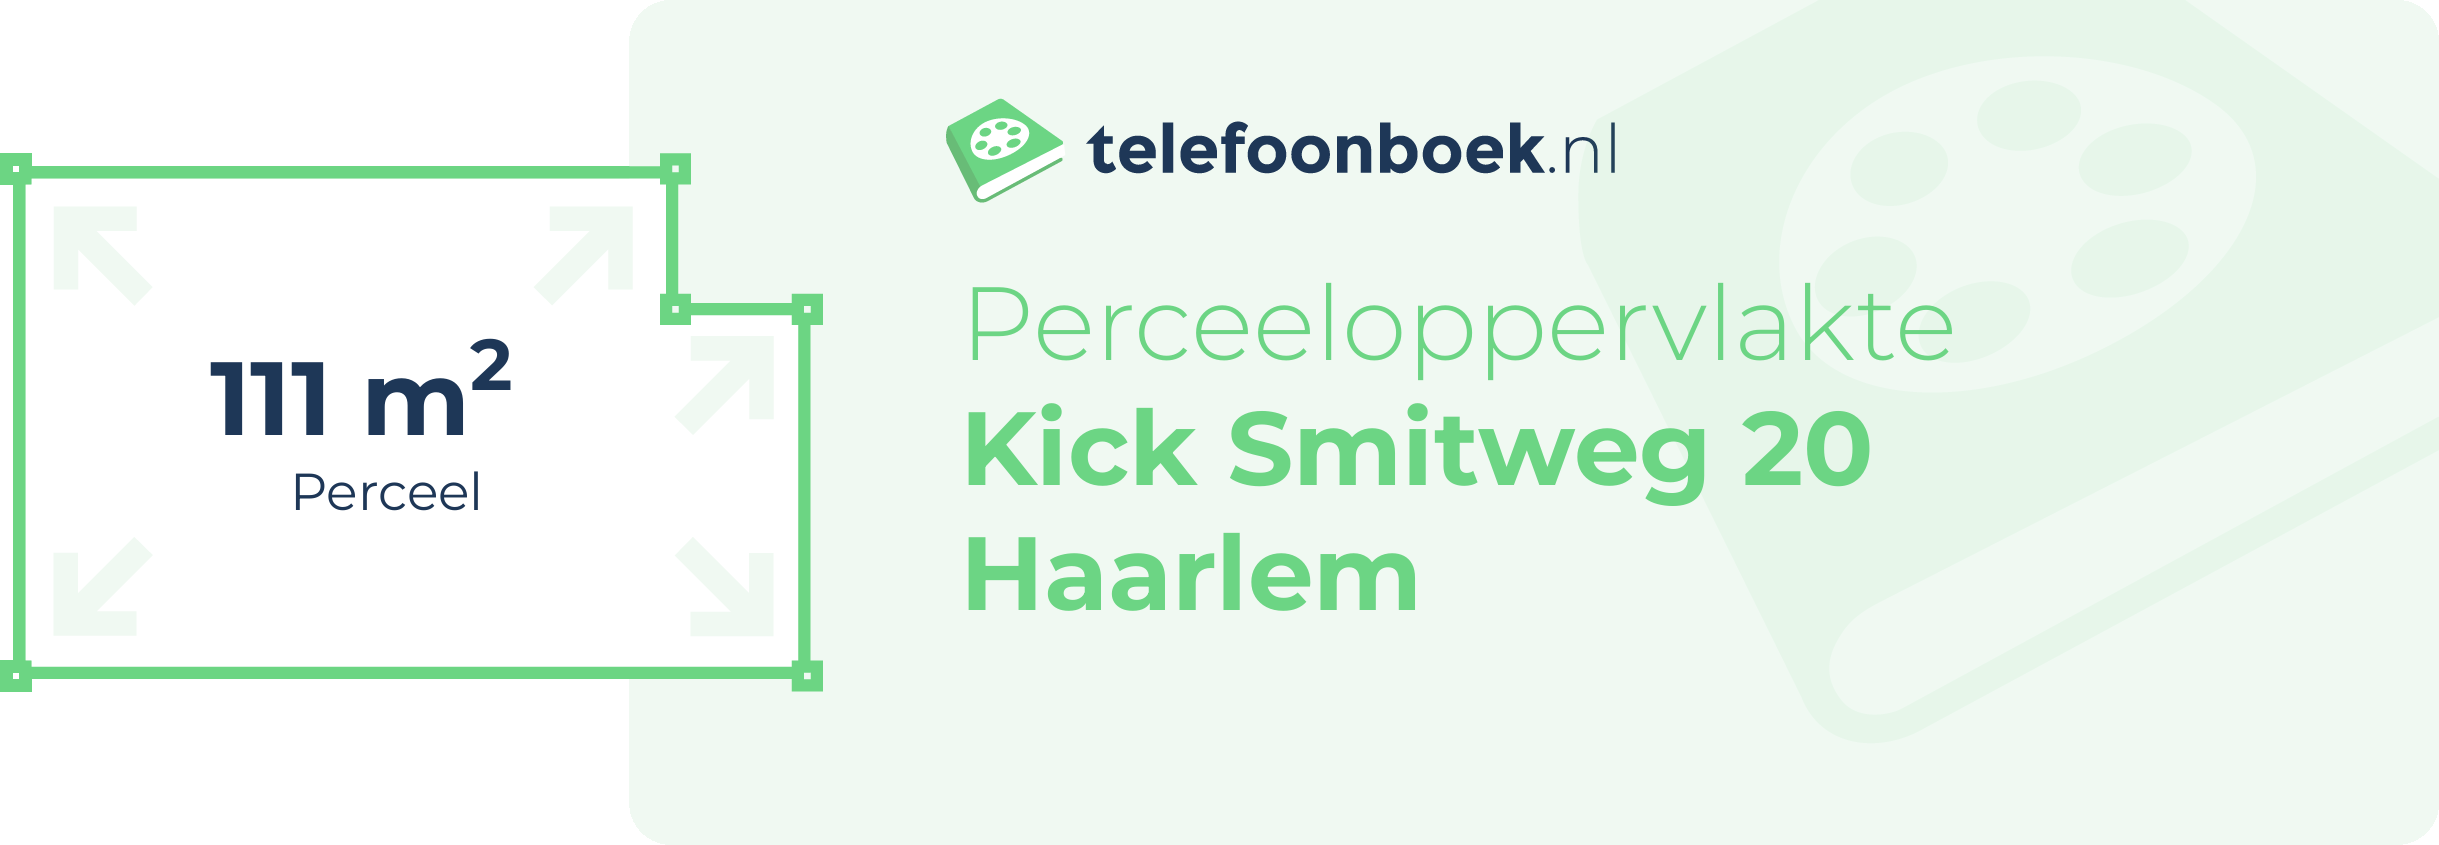 Perceeloppervlakte Kick Smitweg 20 Haarlem